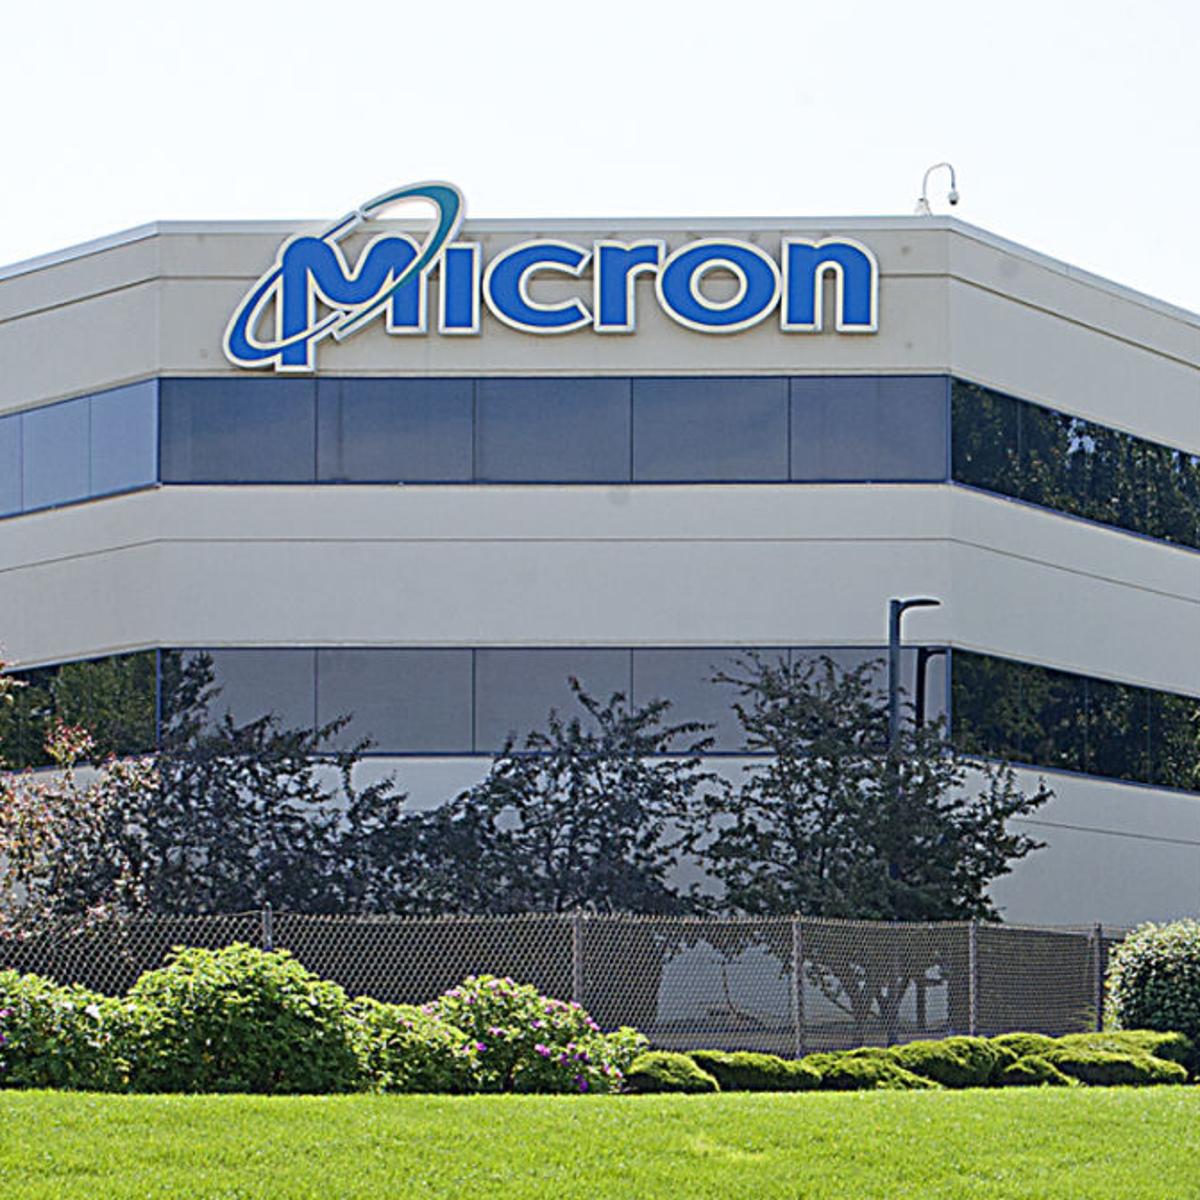 Micron announces plans to build $15 billion facility in Boise, Local News